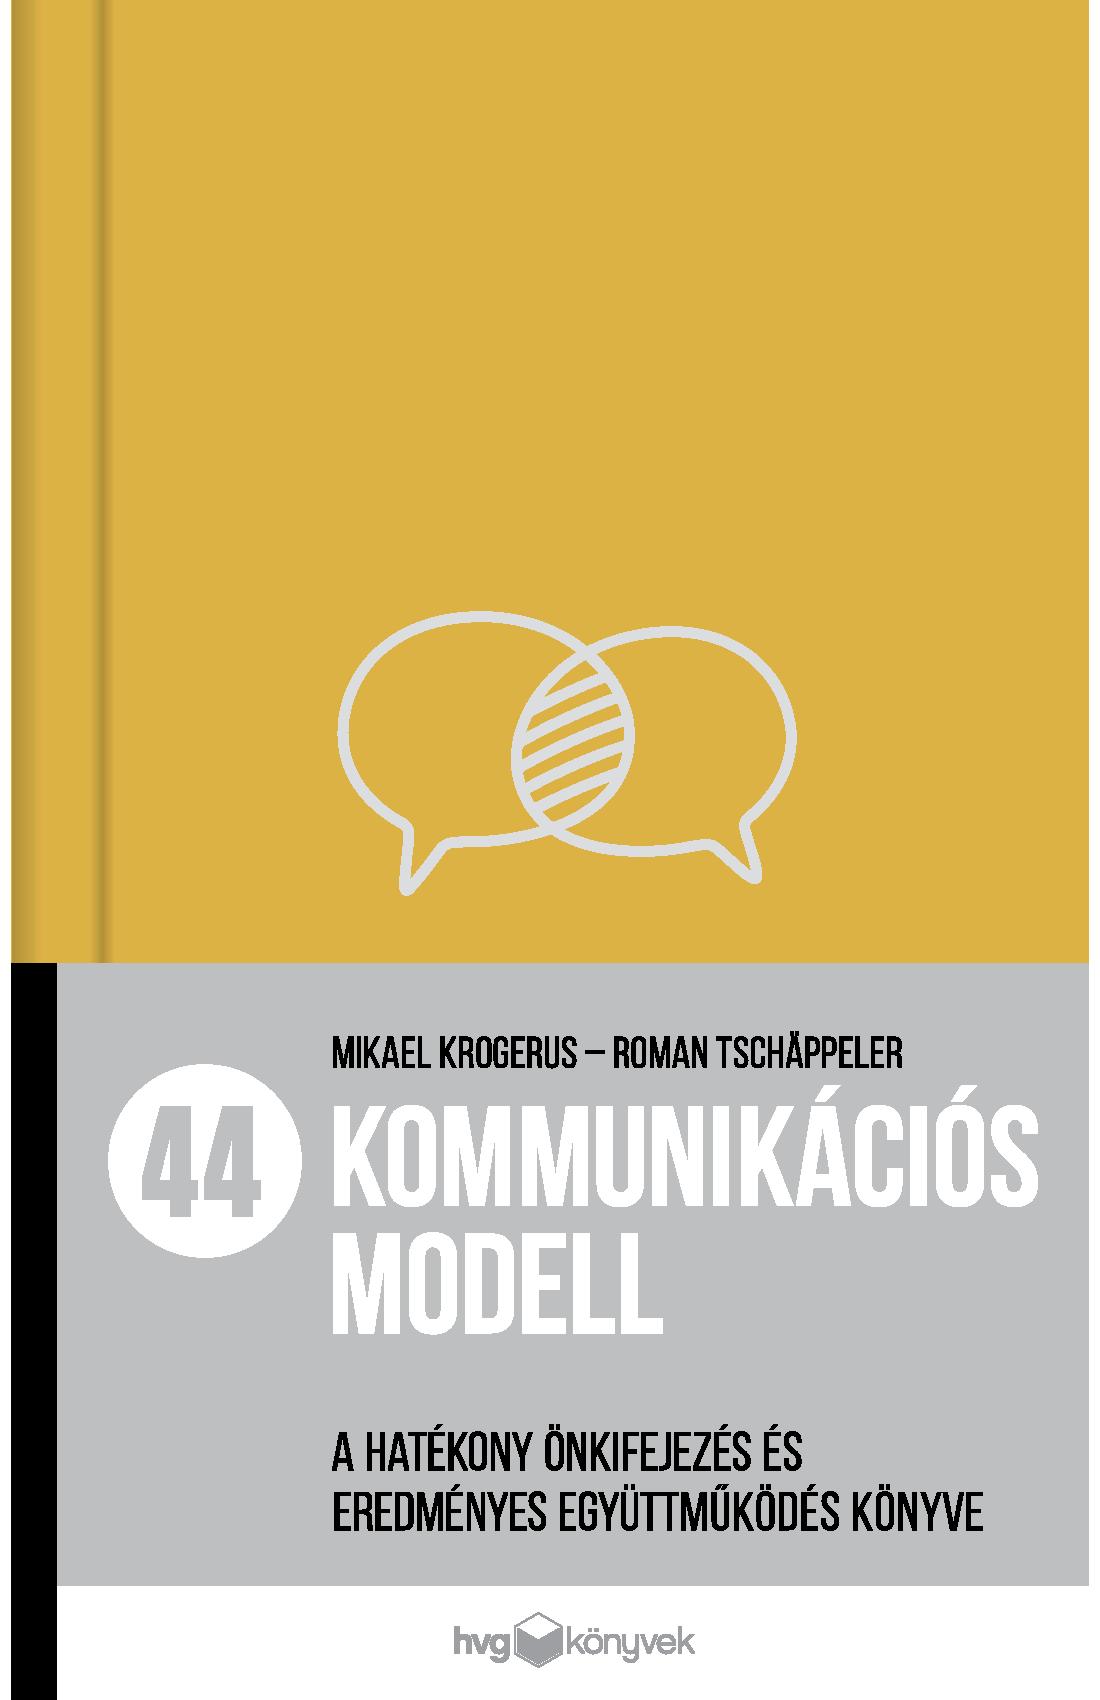 Mikael - Tschppeler Krogerus - 44 Kommunikcis Modell